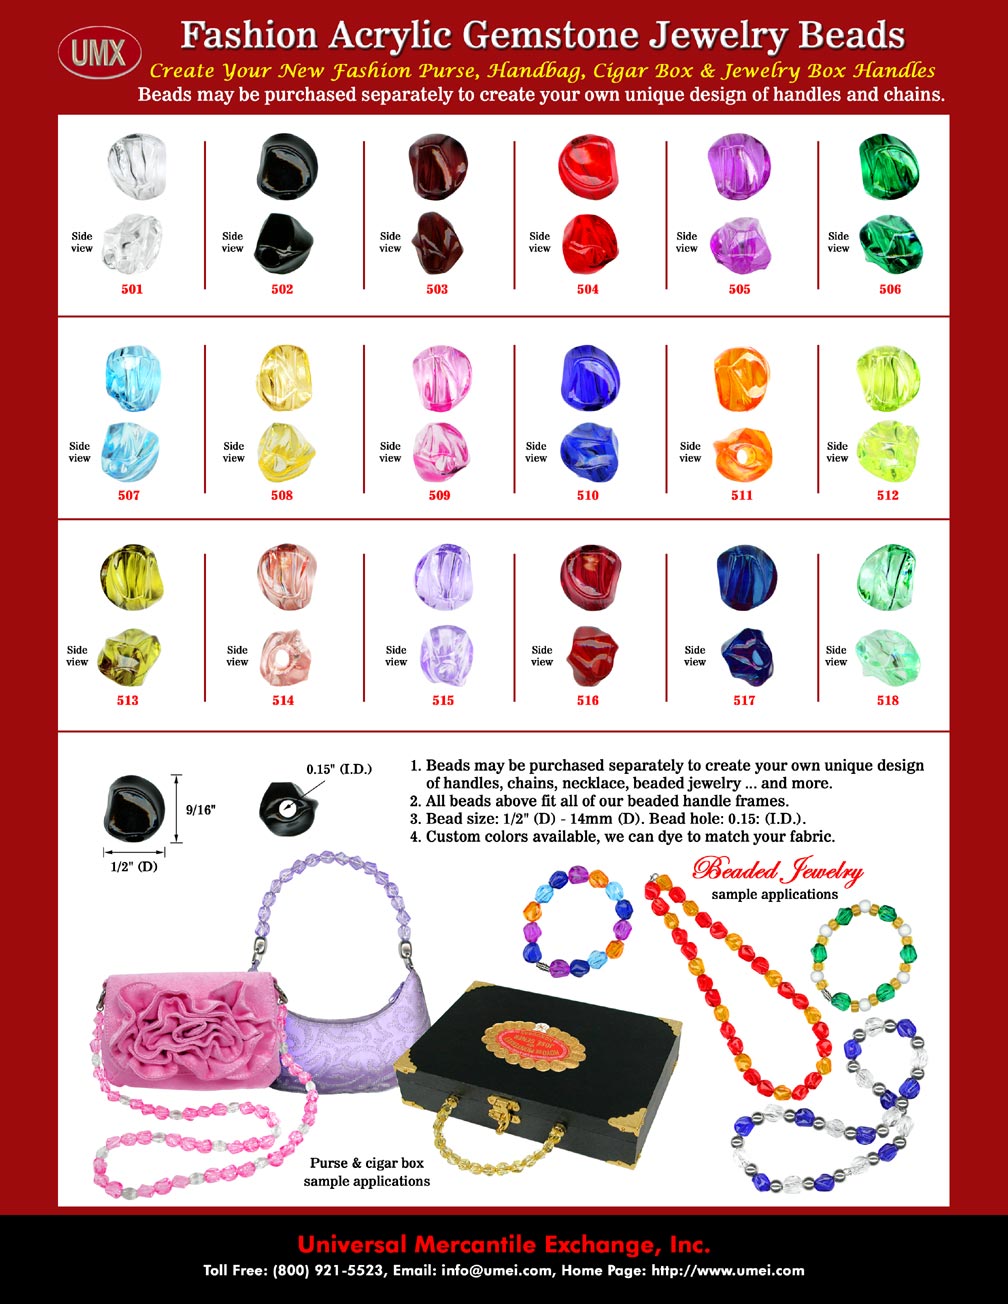 We are wholesale gemstone bead store. Our stylish gemstones are fashioned from acrylic gemstone beads.